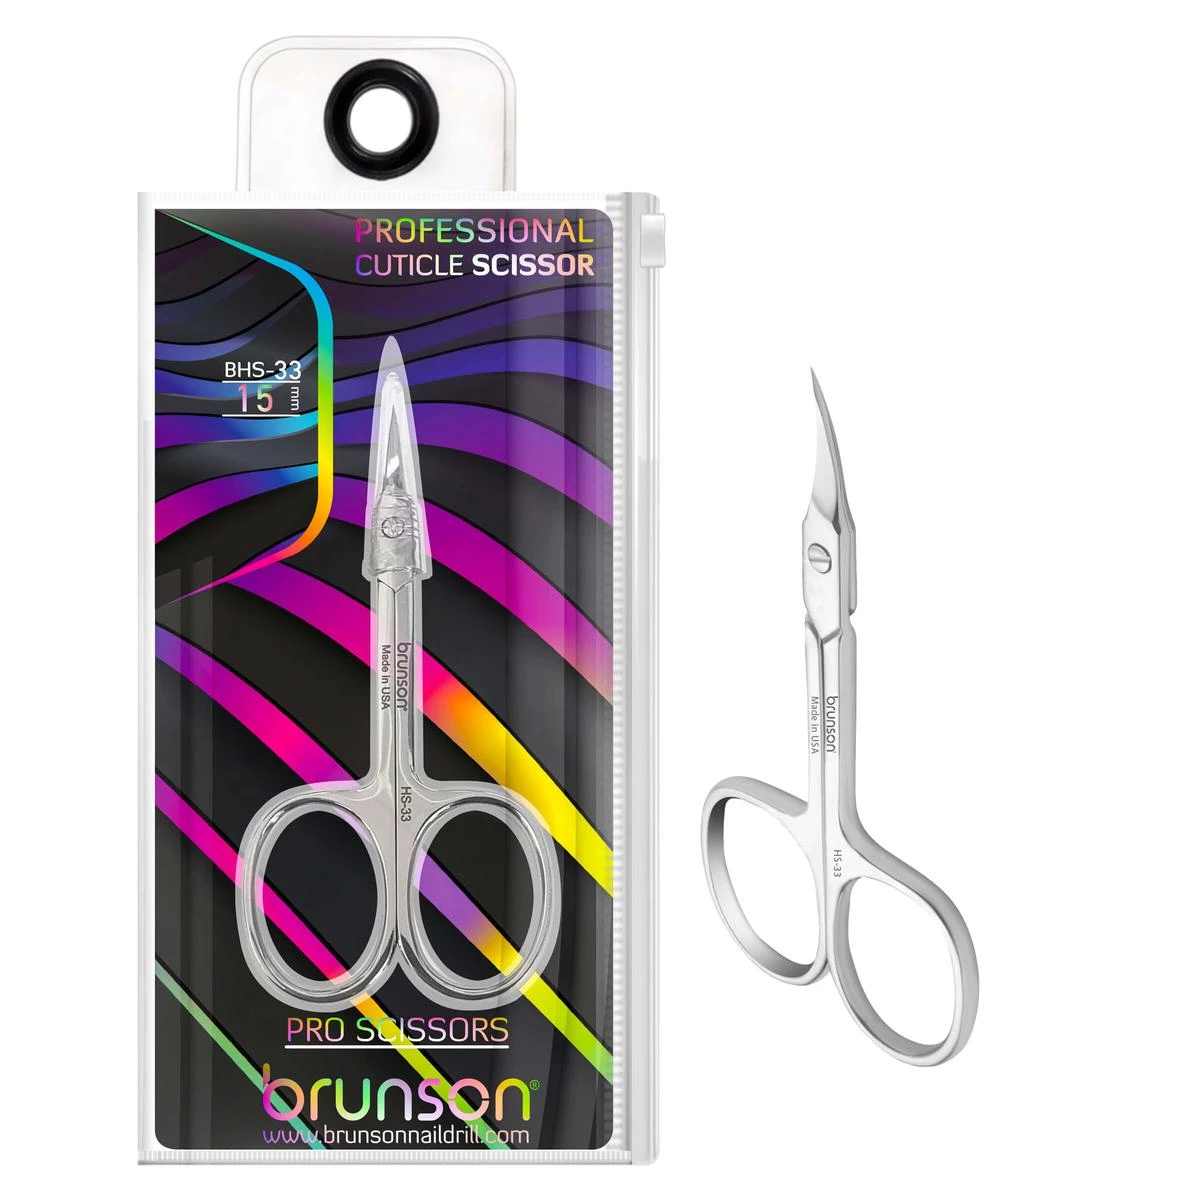 Professional-Cuticle-Scissors-BHS-33-Brunson-1